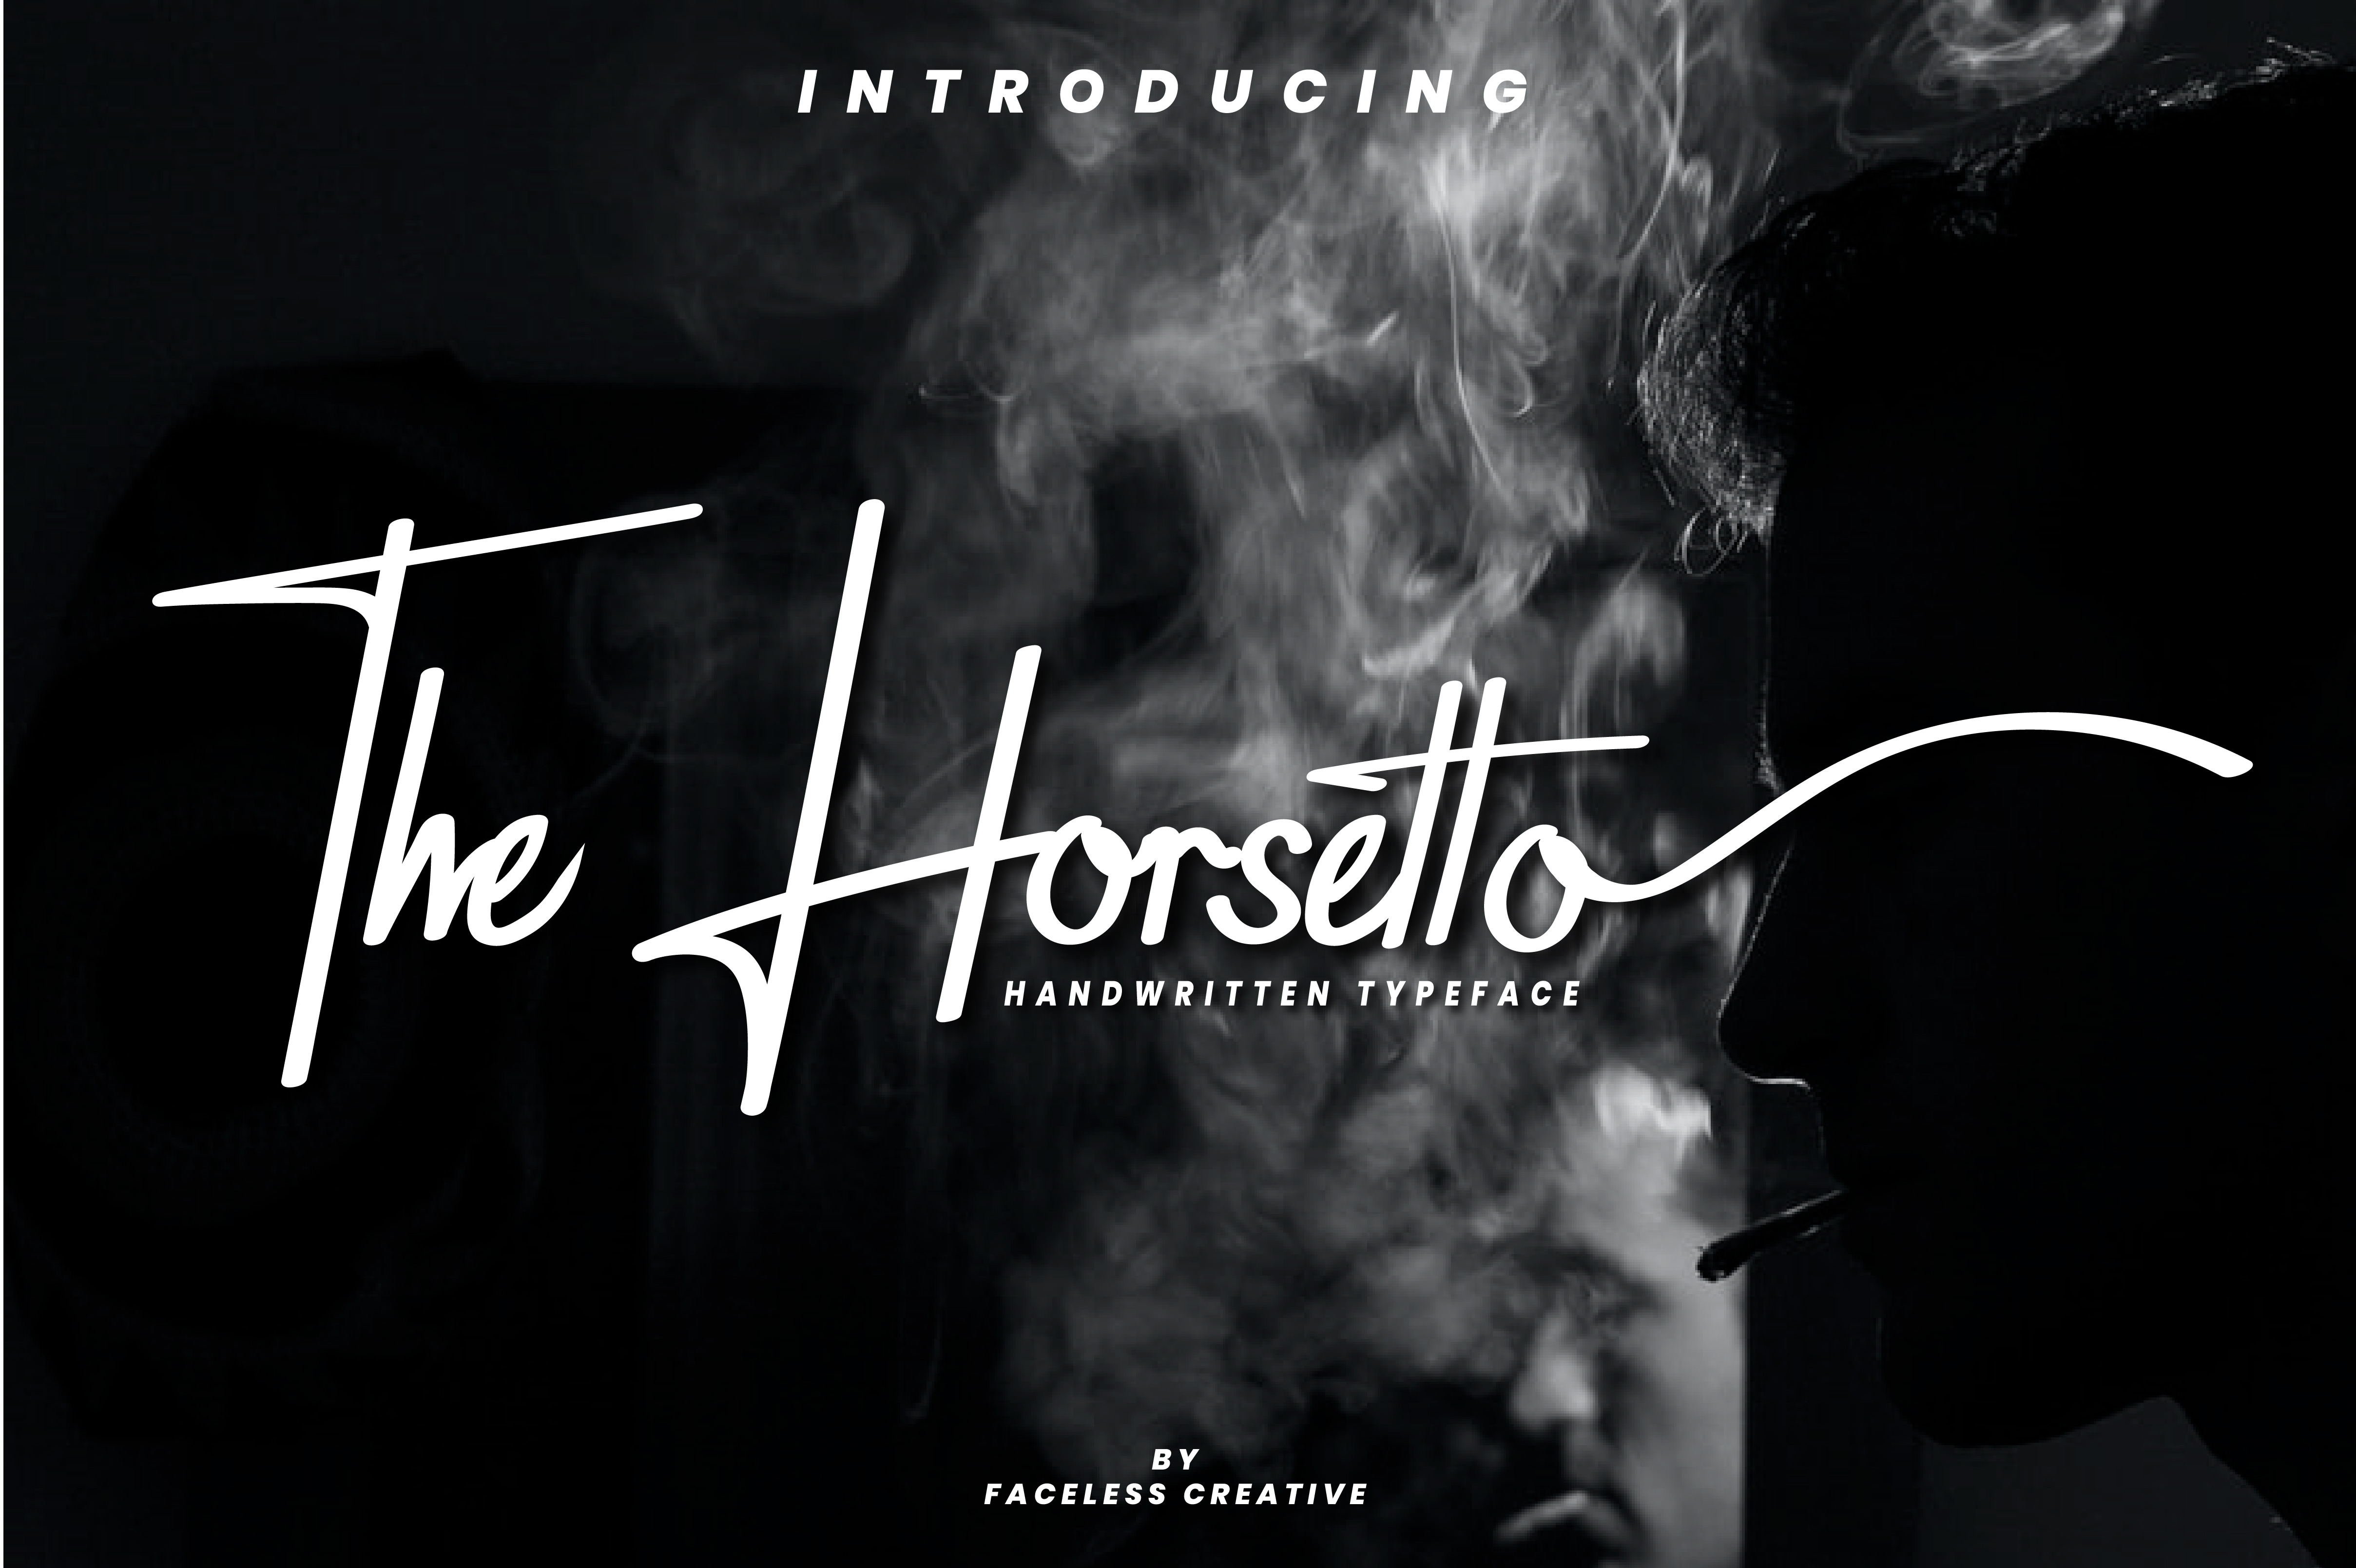 The Horsetto